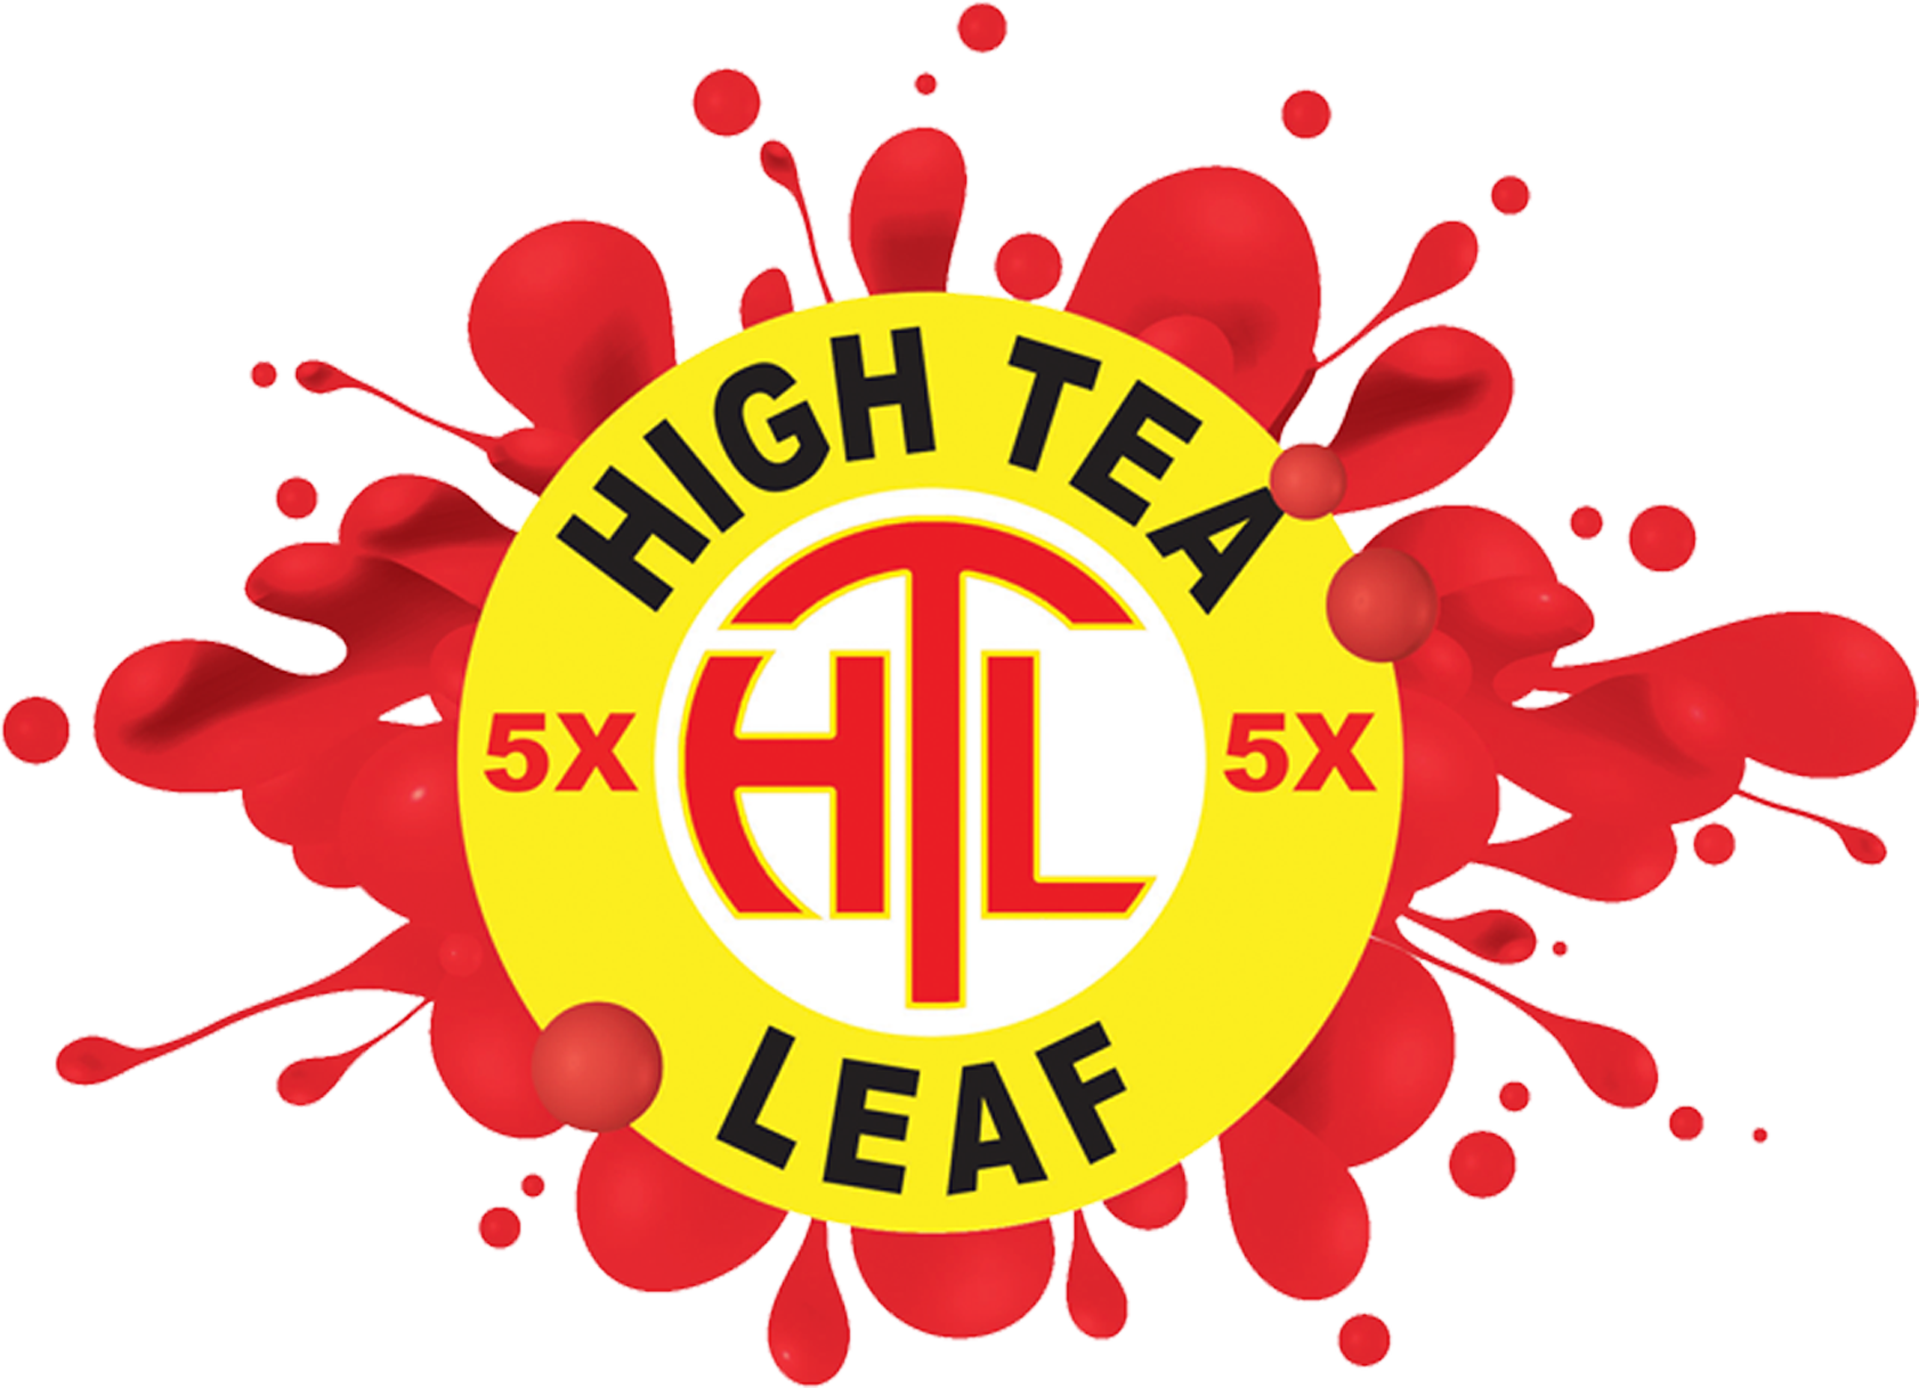 High Tea Leaf